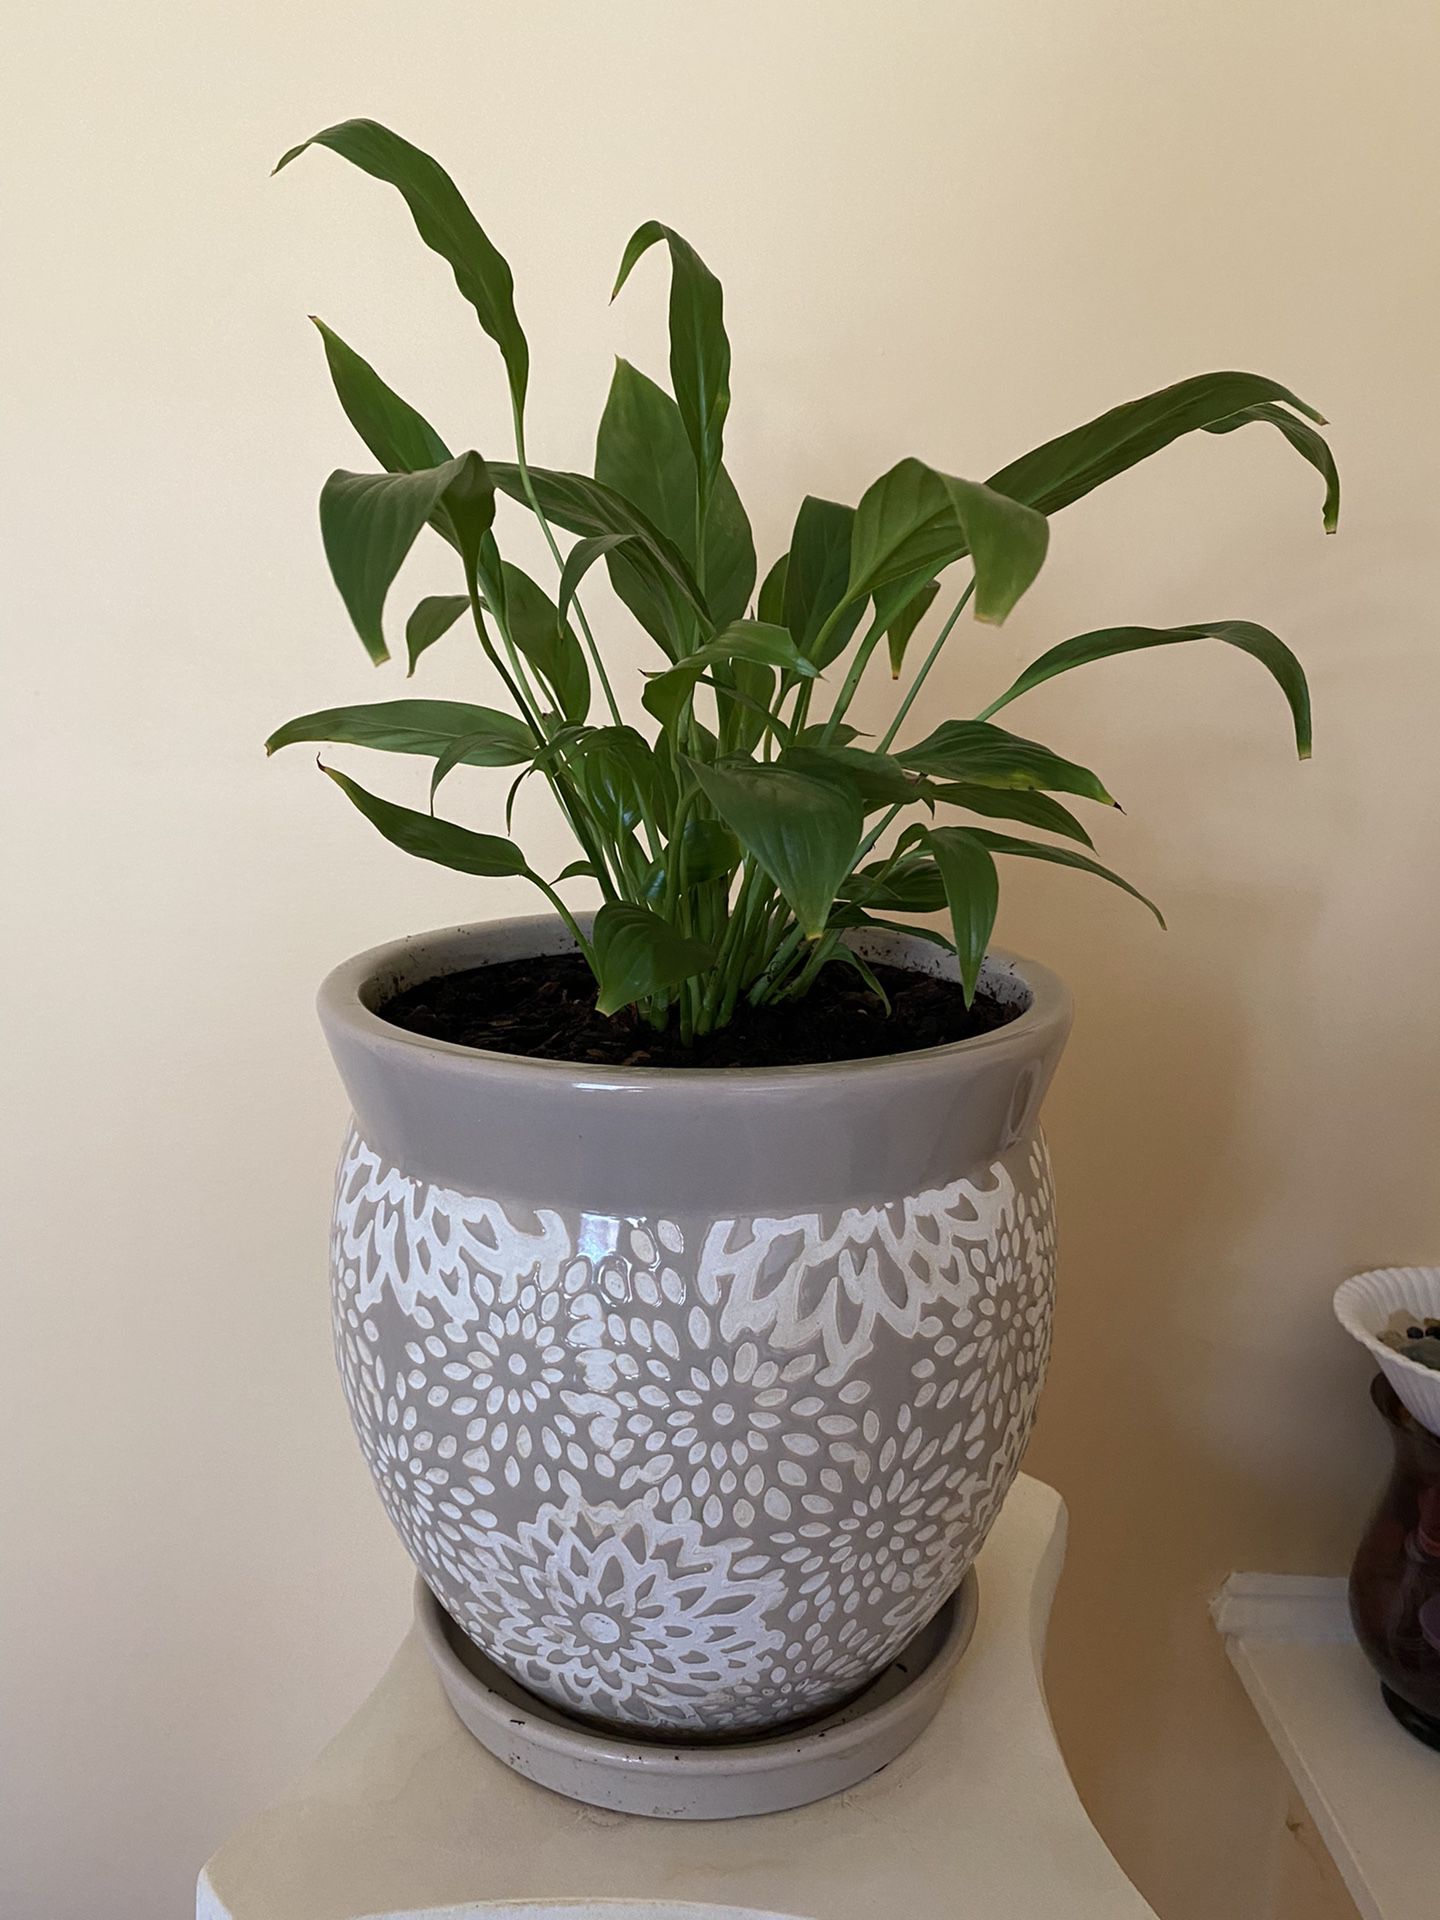 Lily plant in ceramic pot